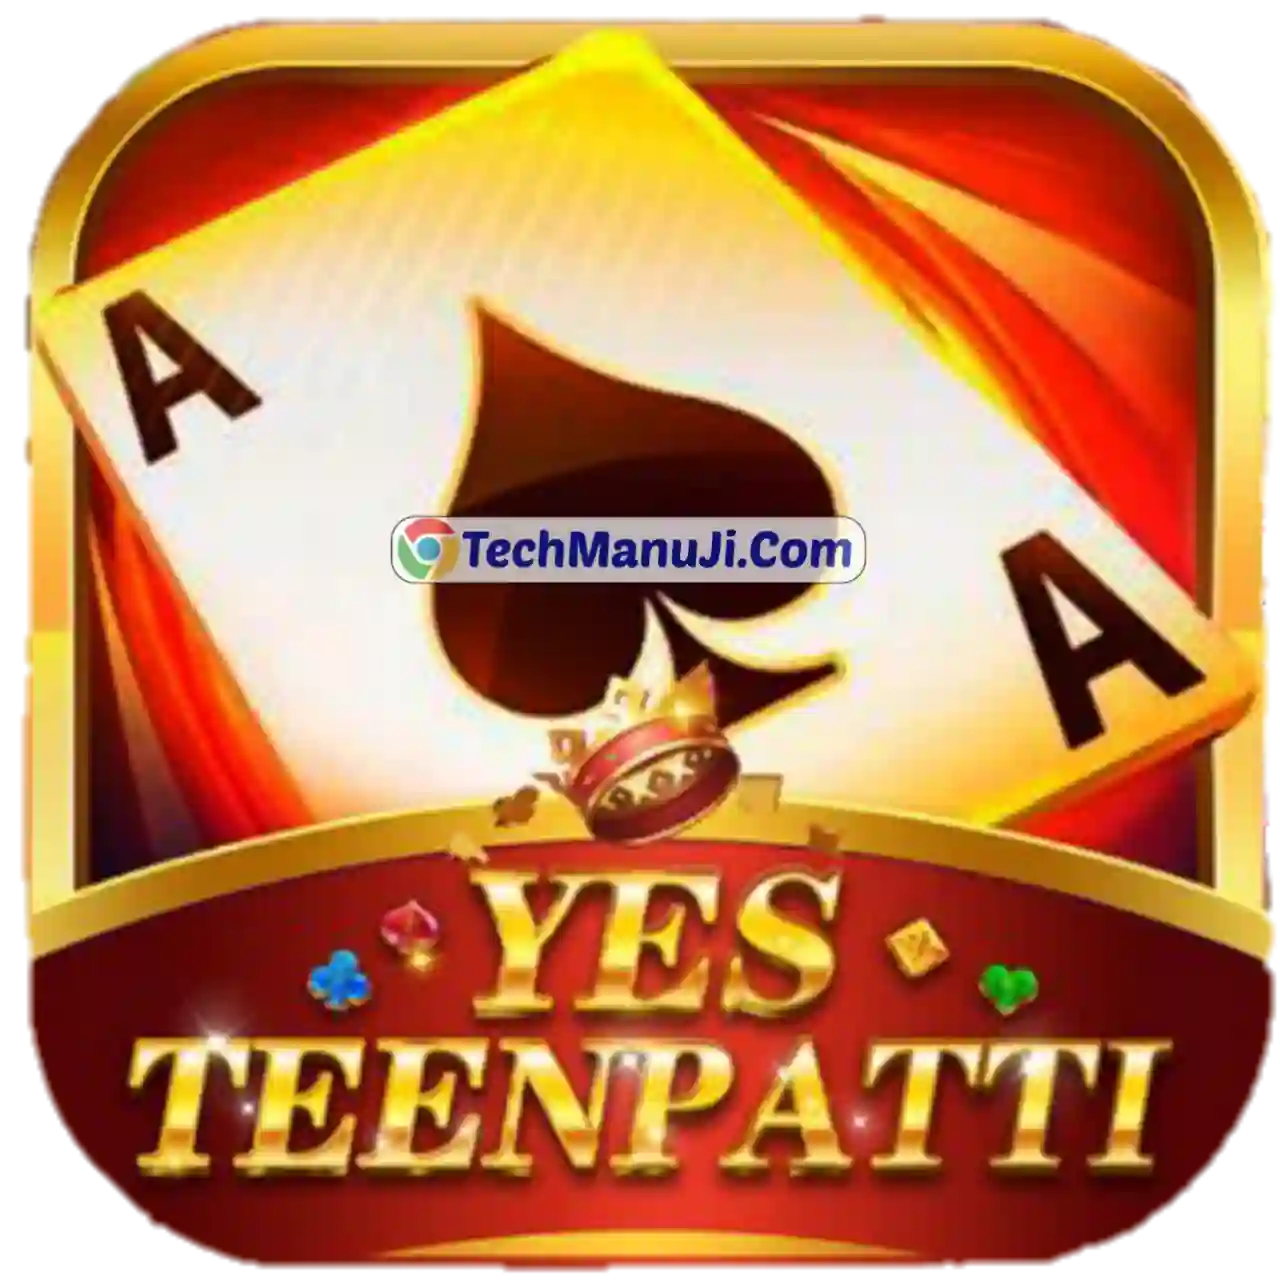 Teen Patti Yes Apk Download - Top 20 Teen Patti App List